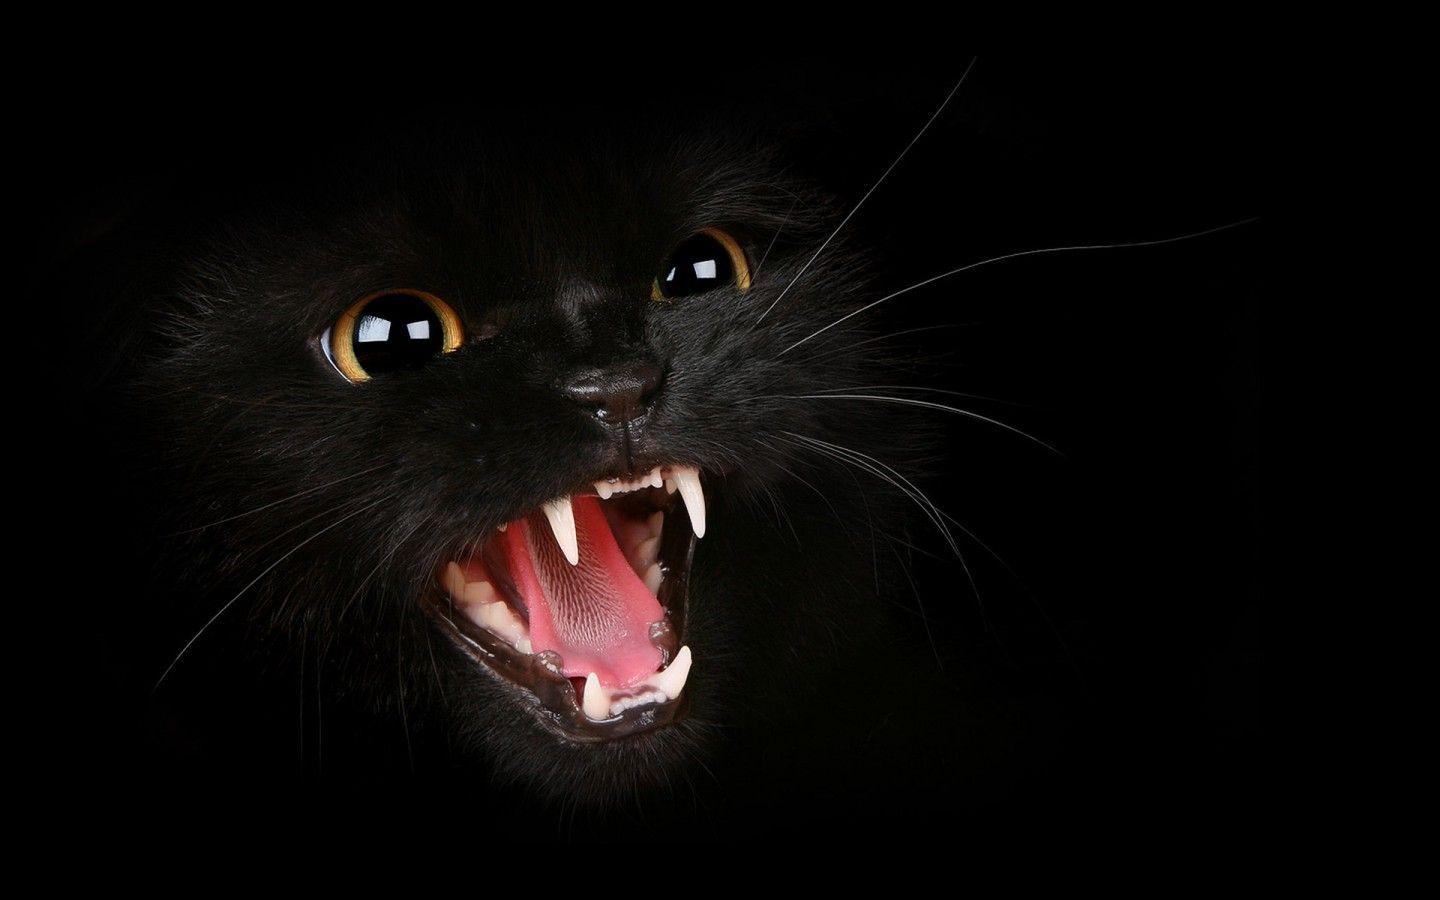 Black Cat Eye Wallpaper 1440x900. Free Photo picture